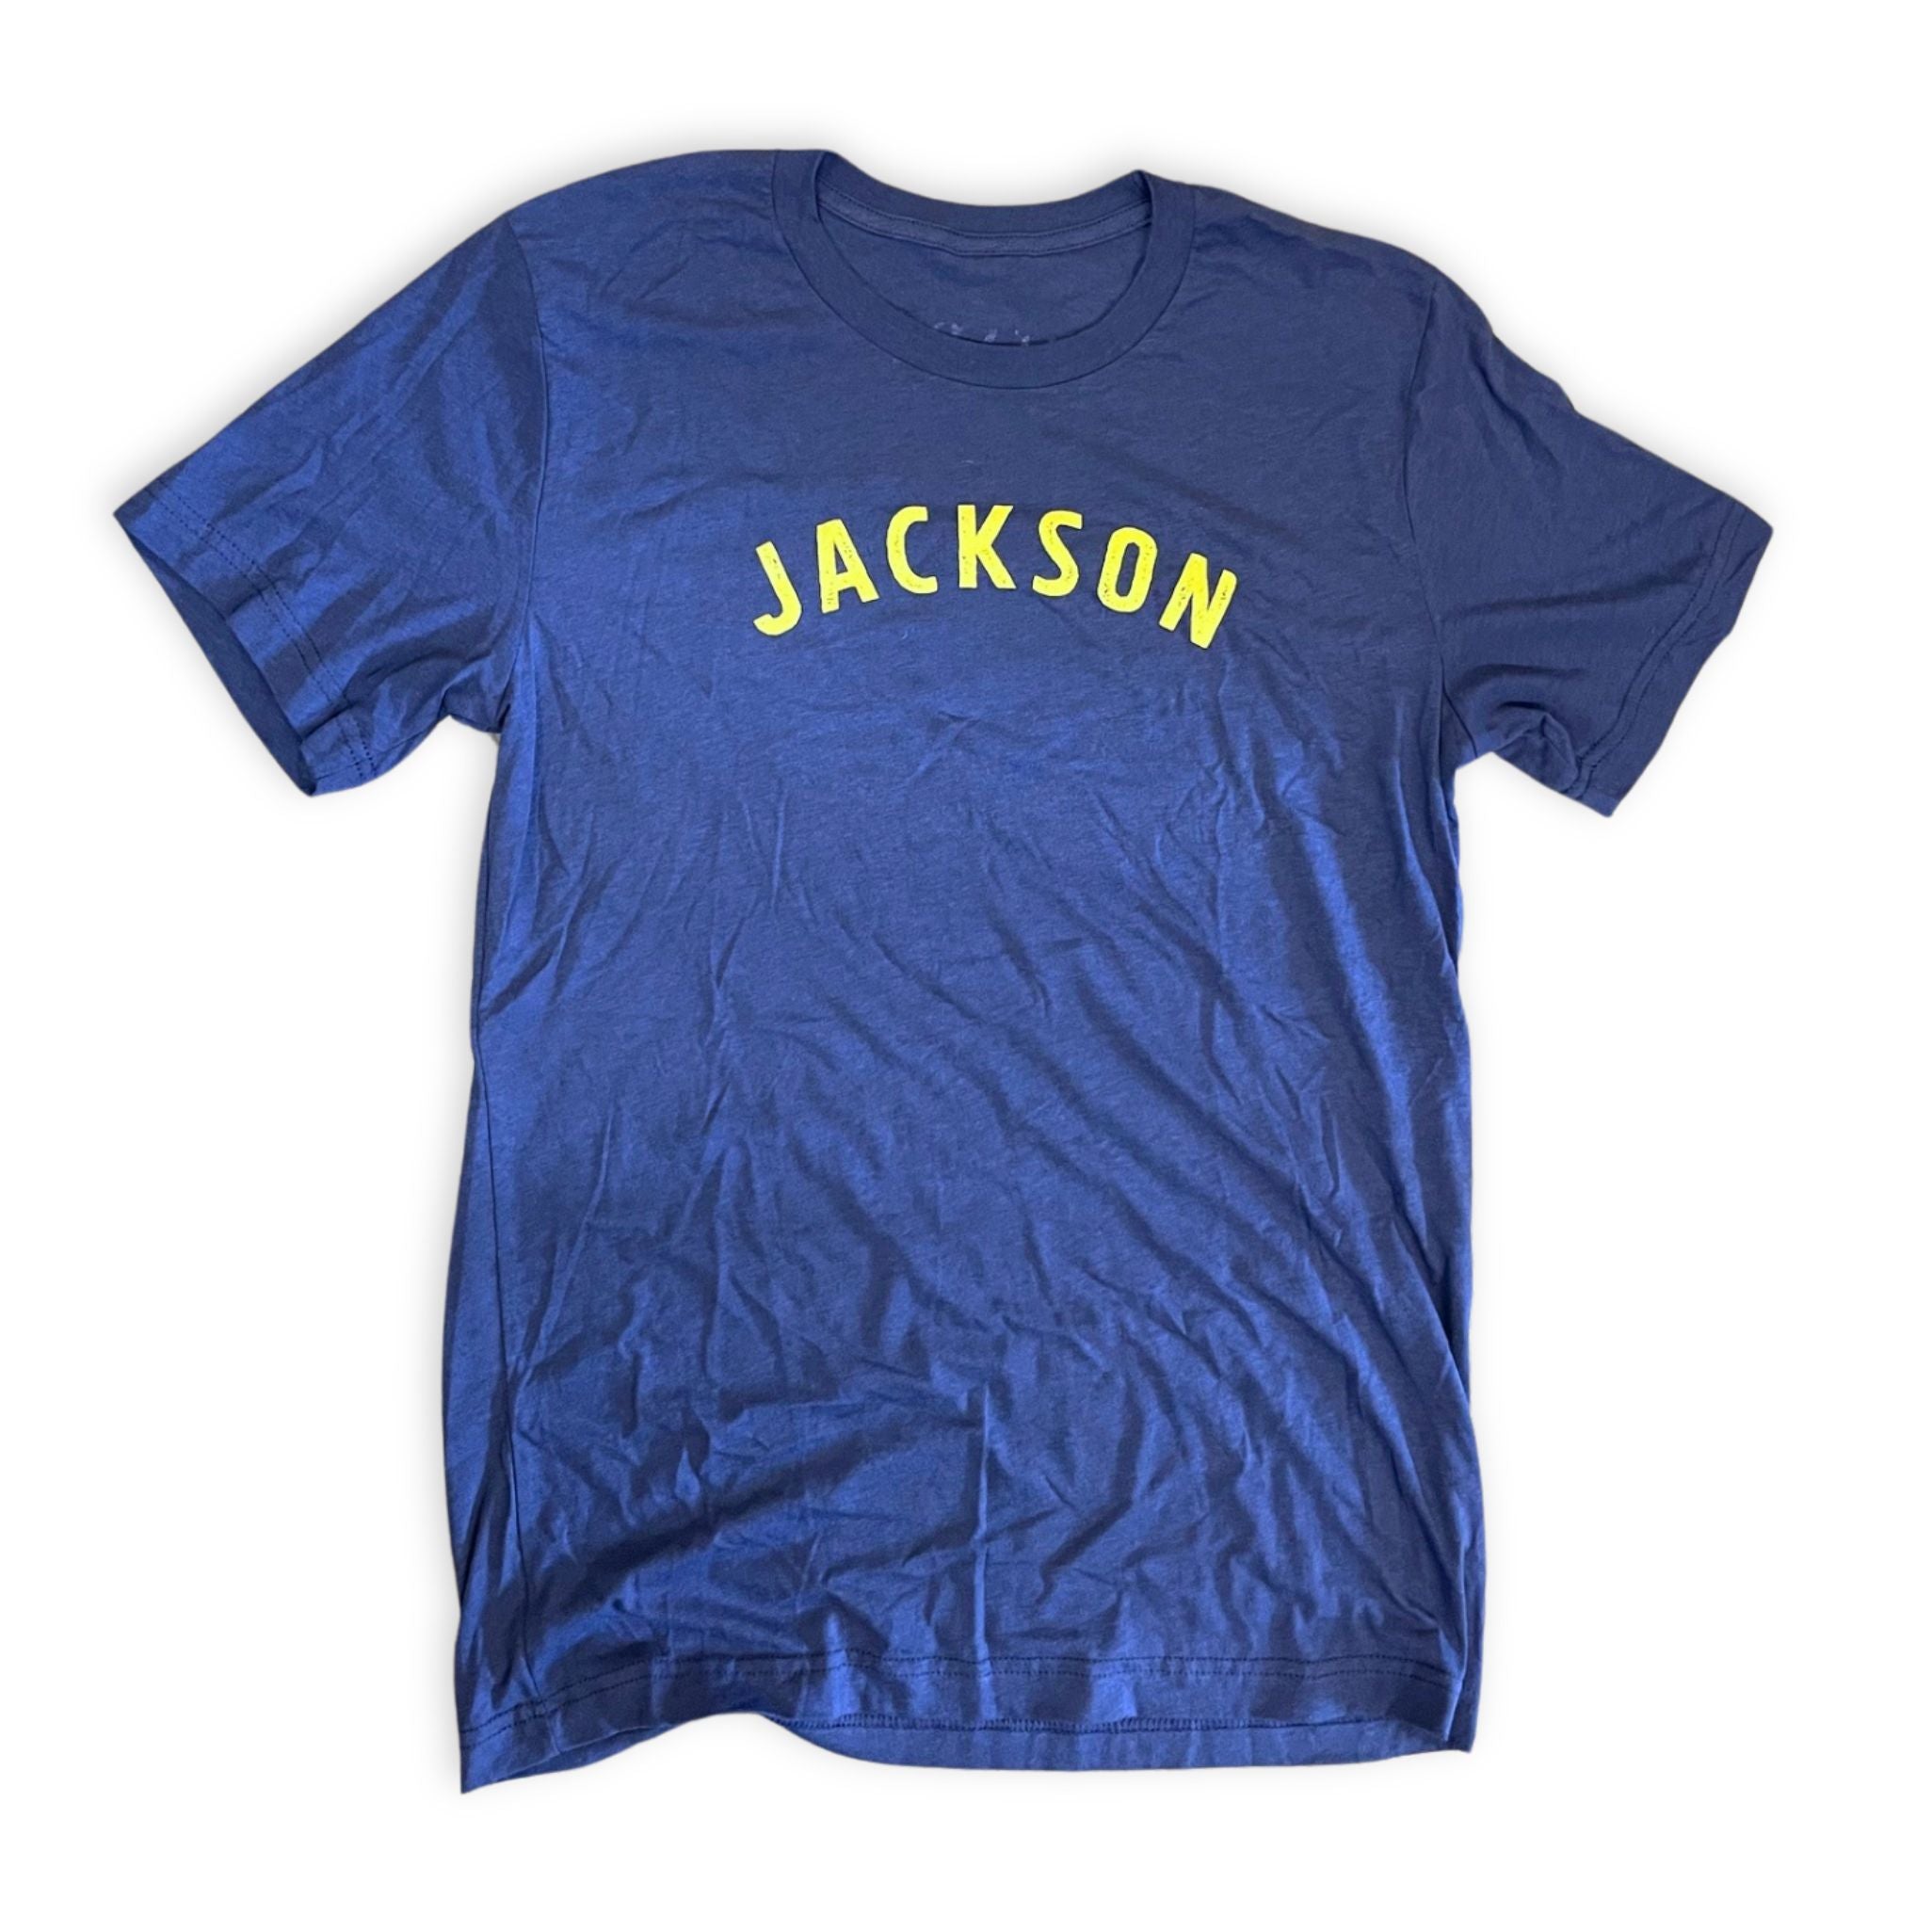 Jackson Shirt - Navy